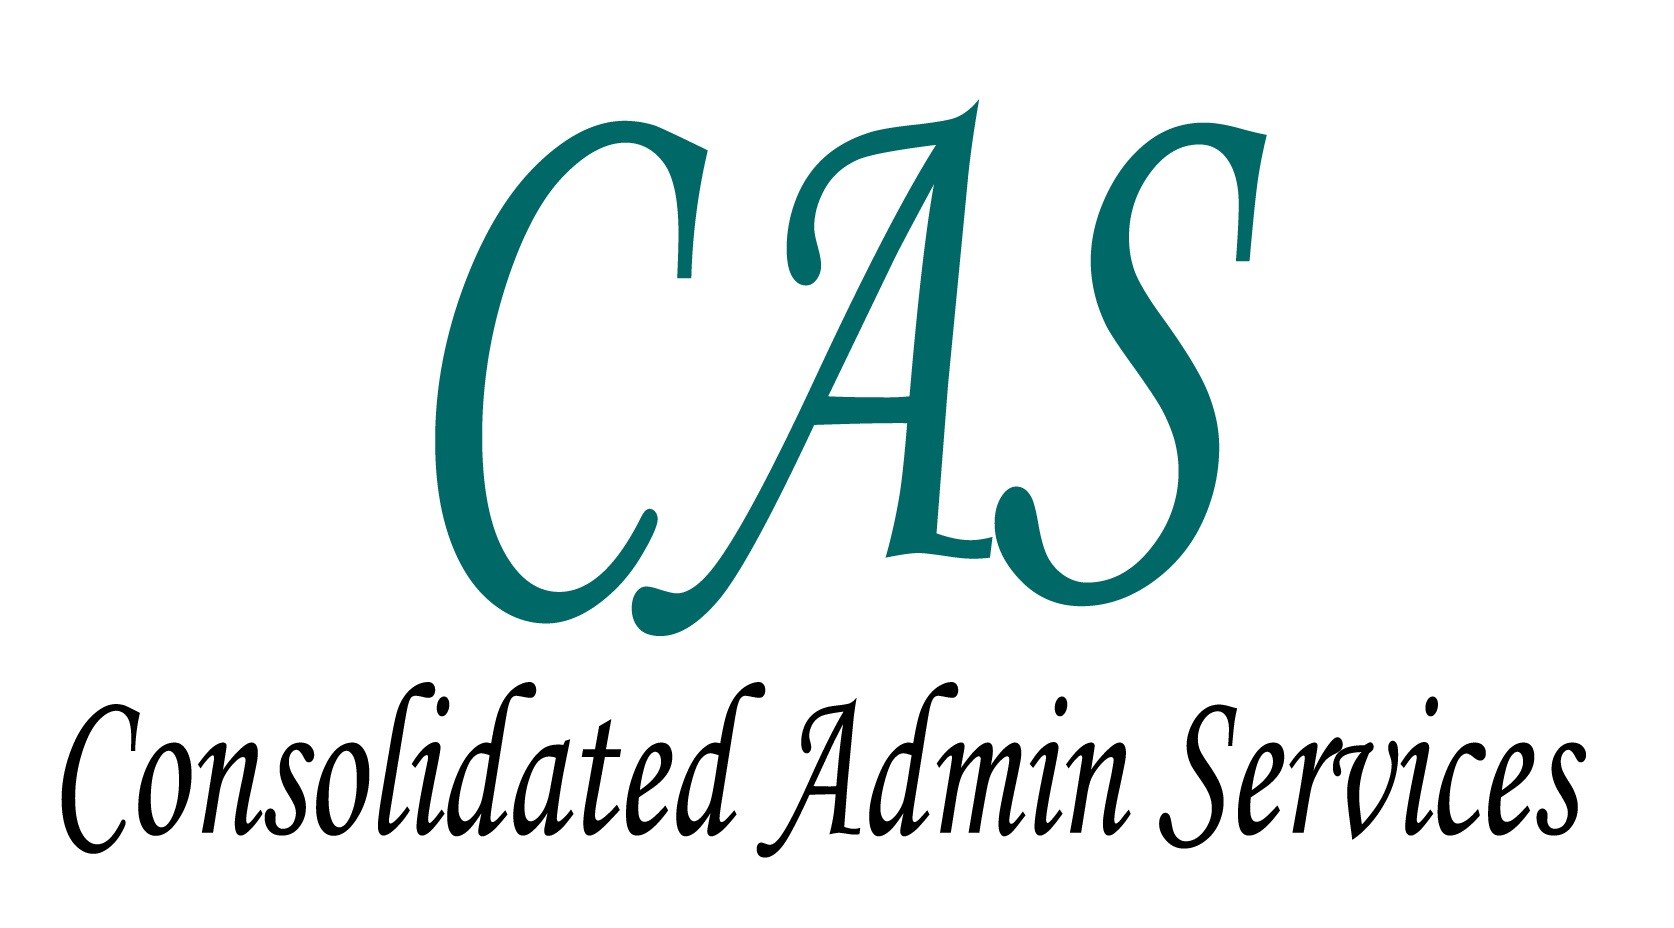 CAS Logo Teal Transparent